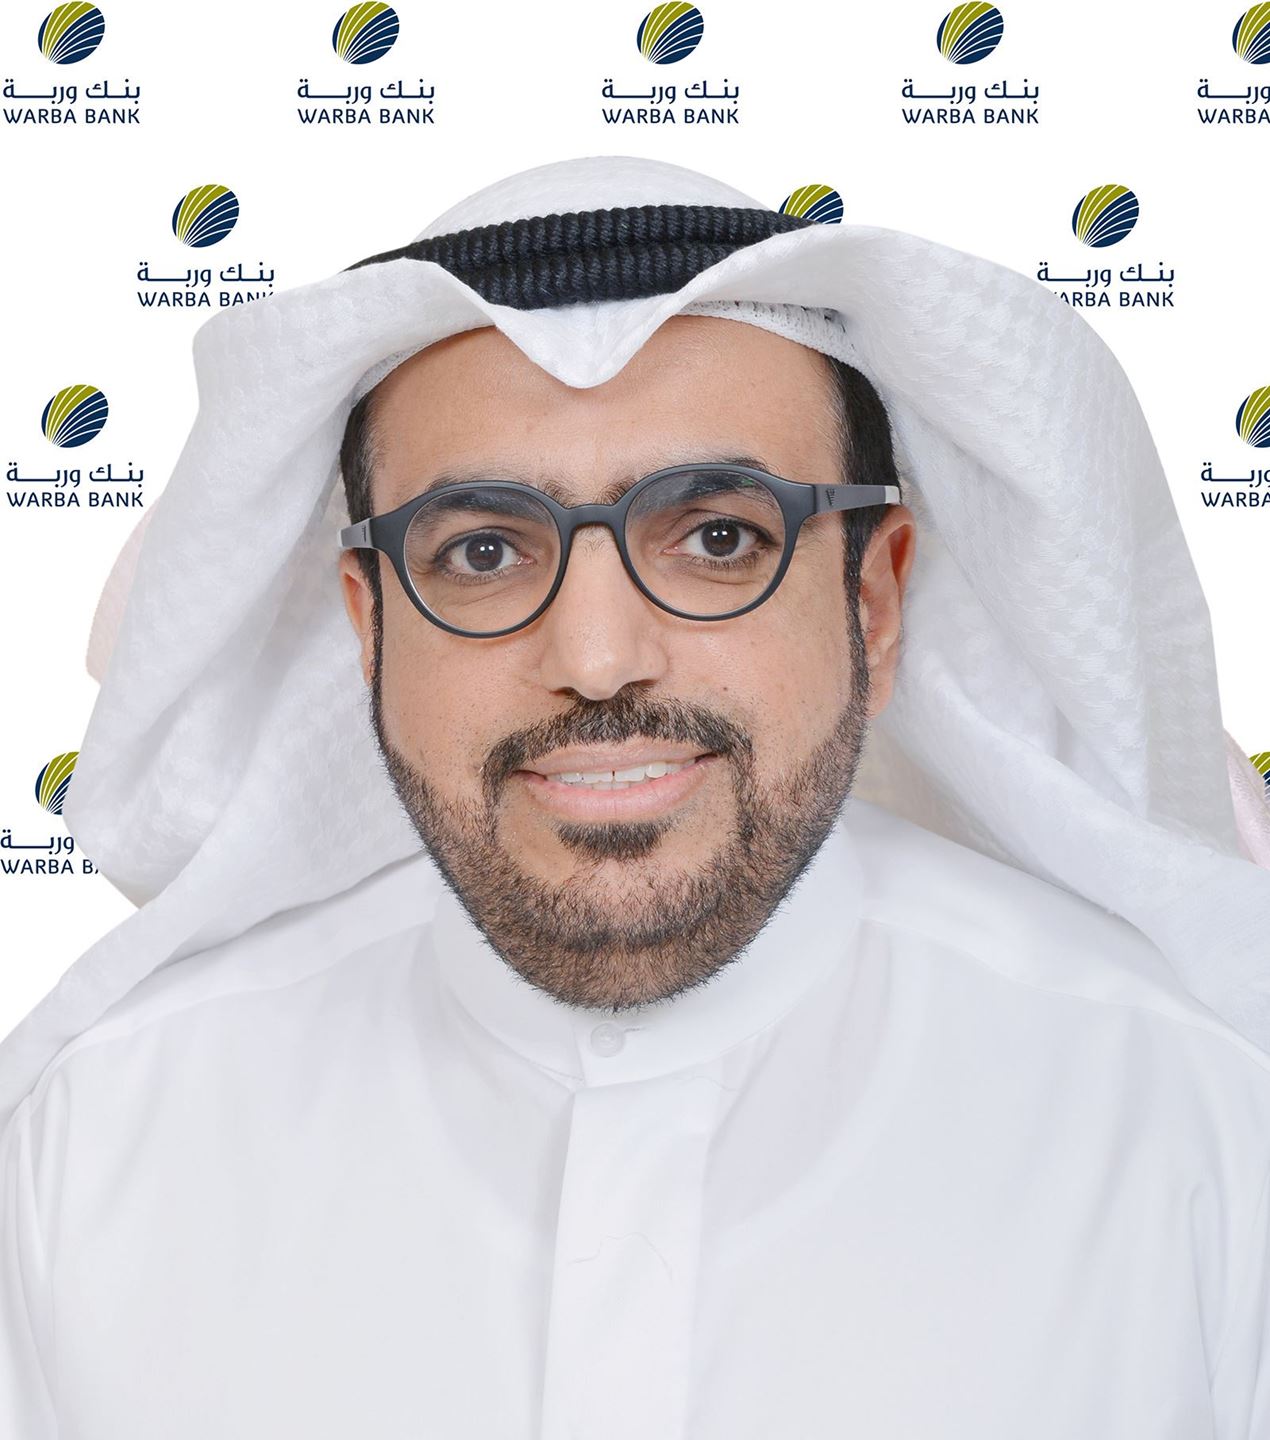 Shaheen Hamad Al Ghanim, the Chief Executive Officer of Warba Bank